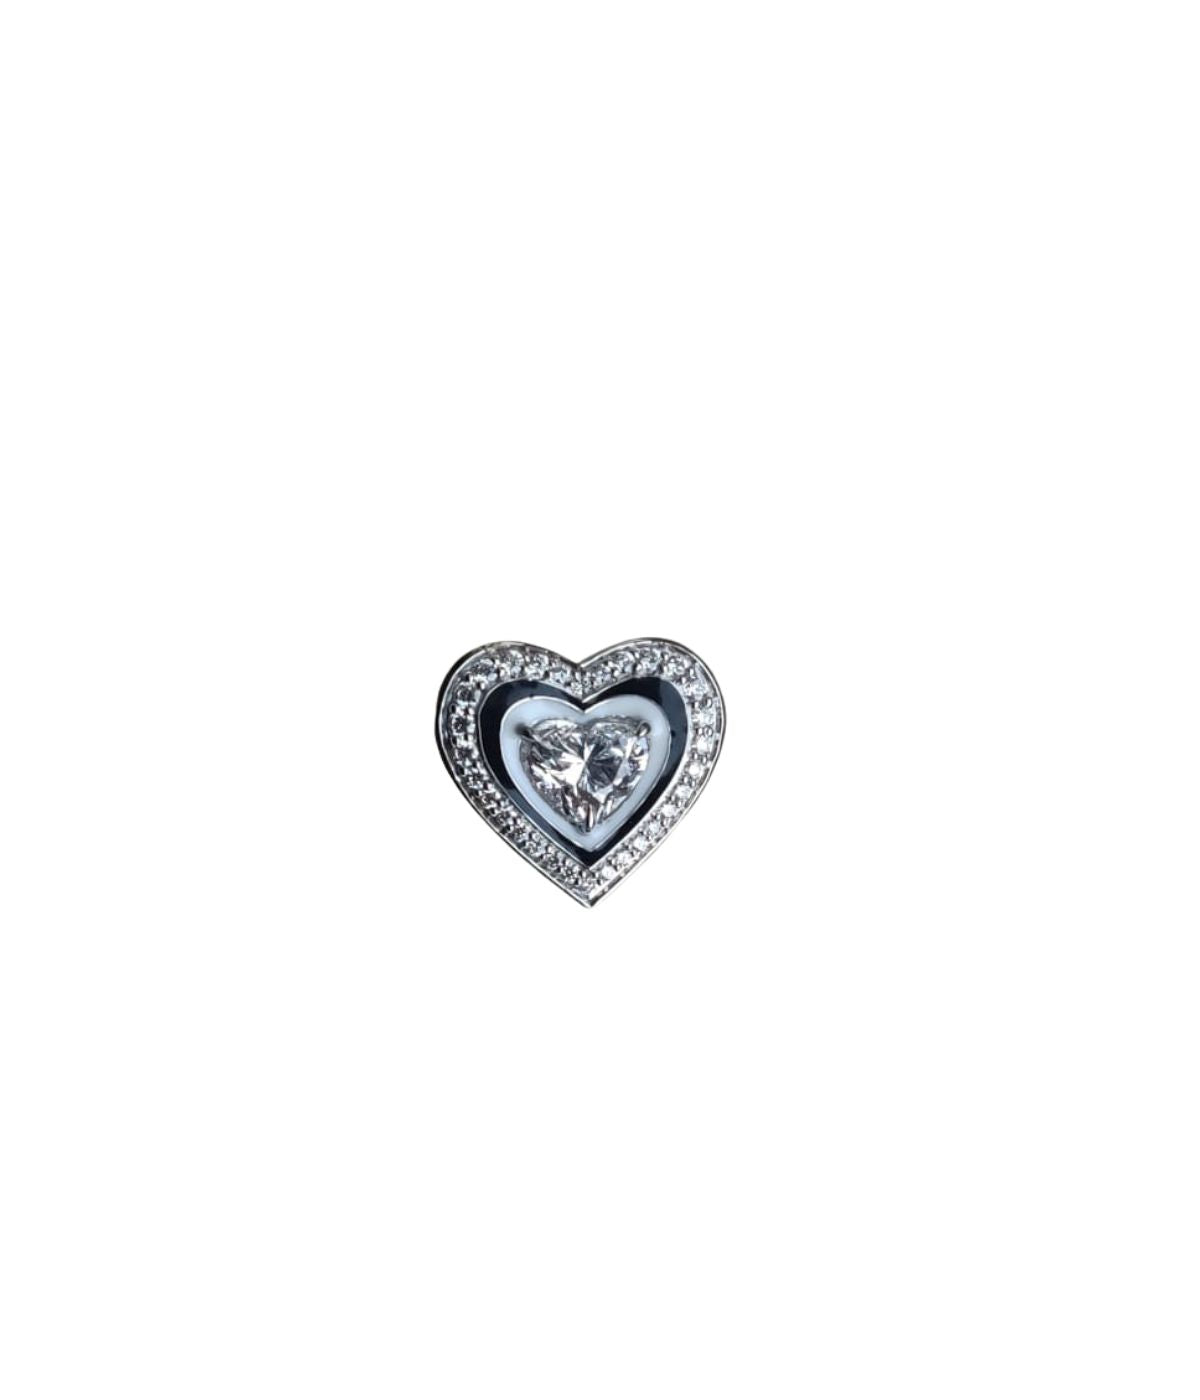 Heartbeat 18k white gold, diamond and black enamel ring